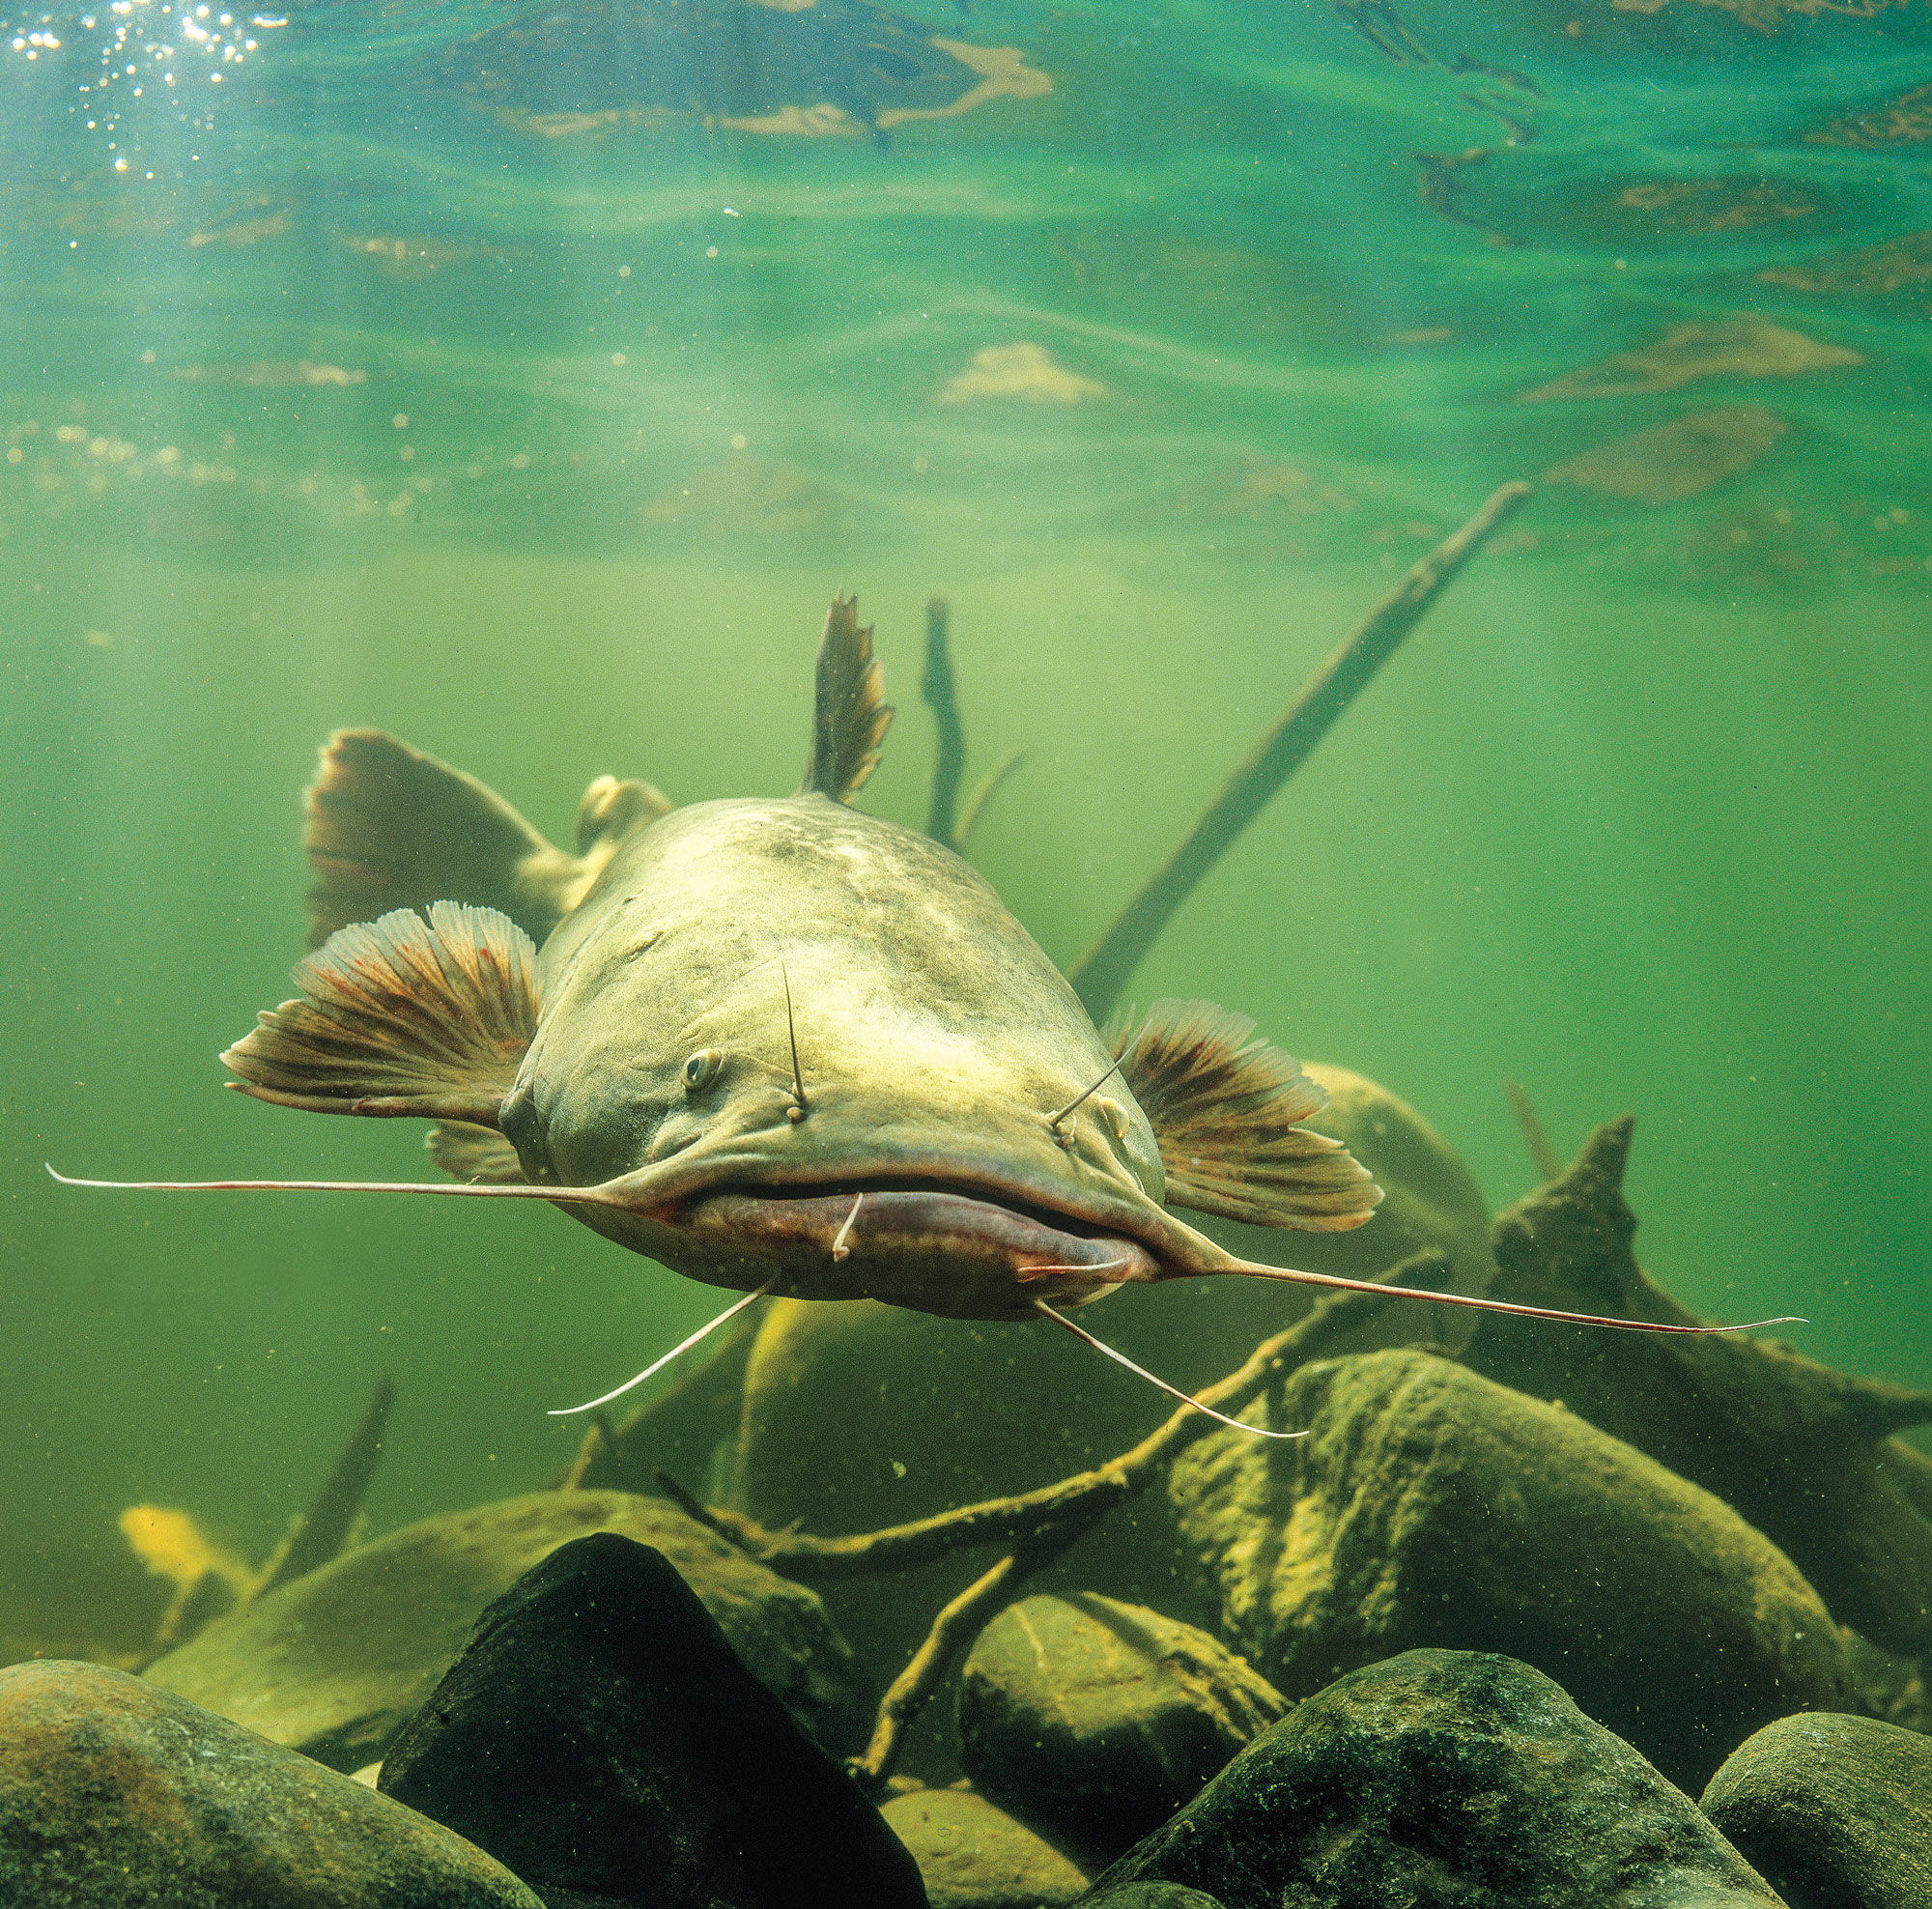 2014 : New Michigan Flathead Catfish Record